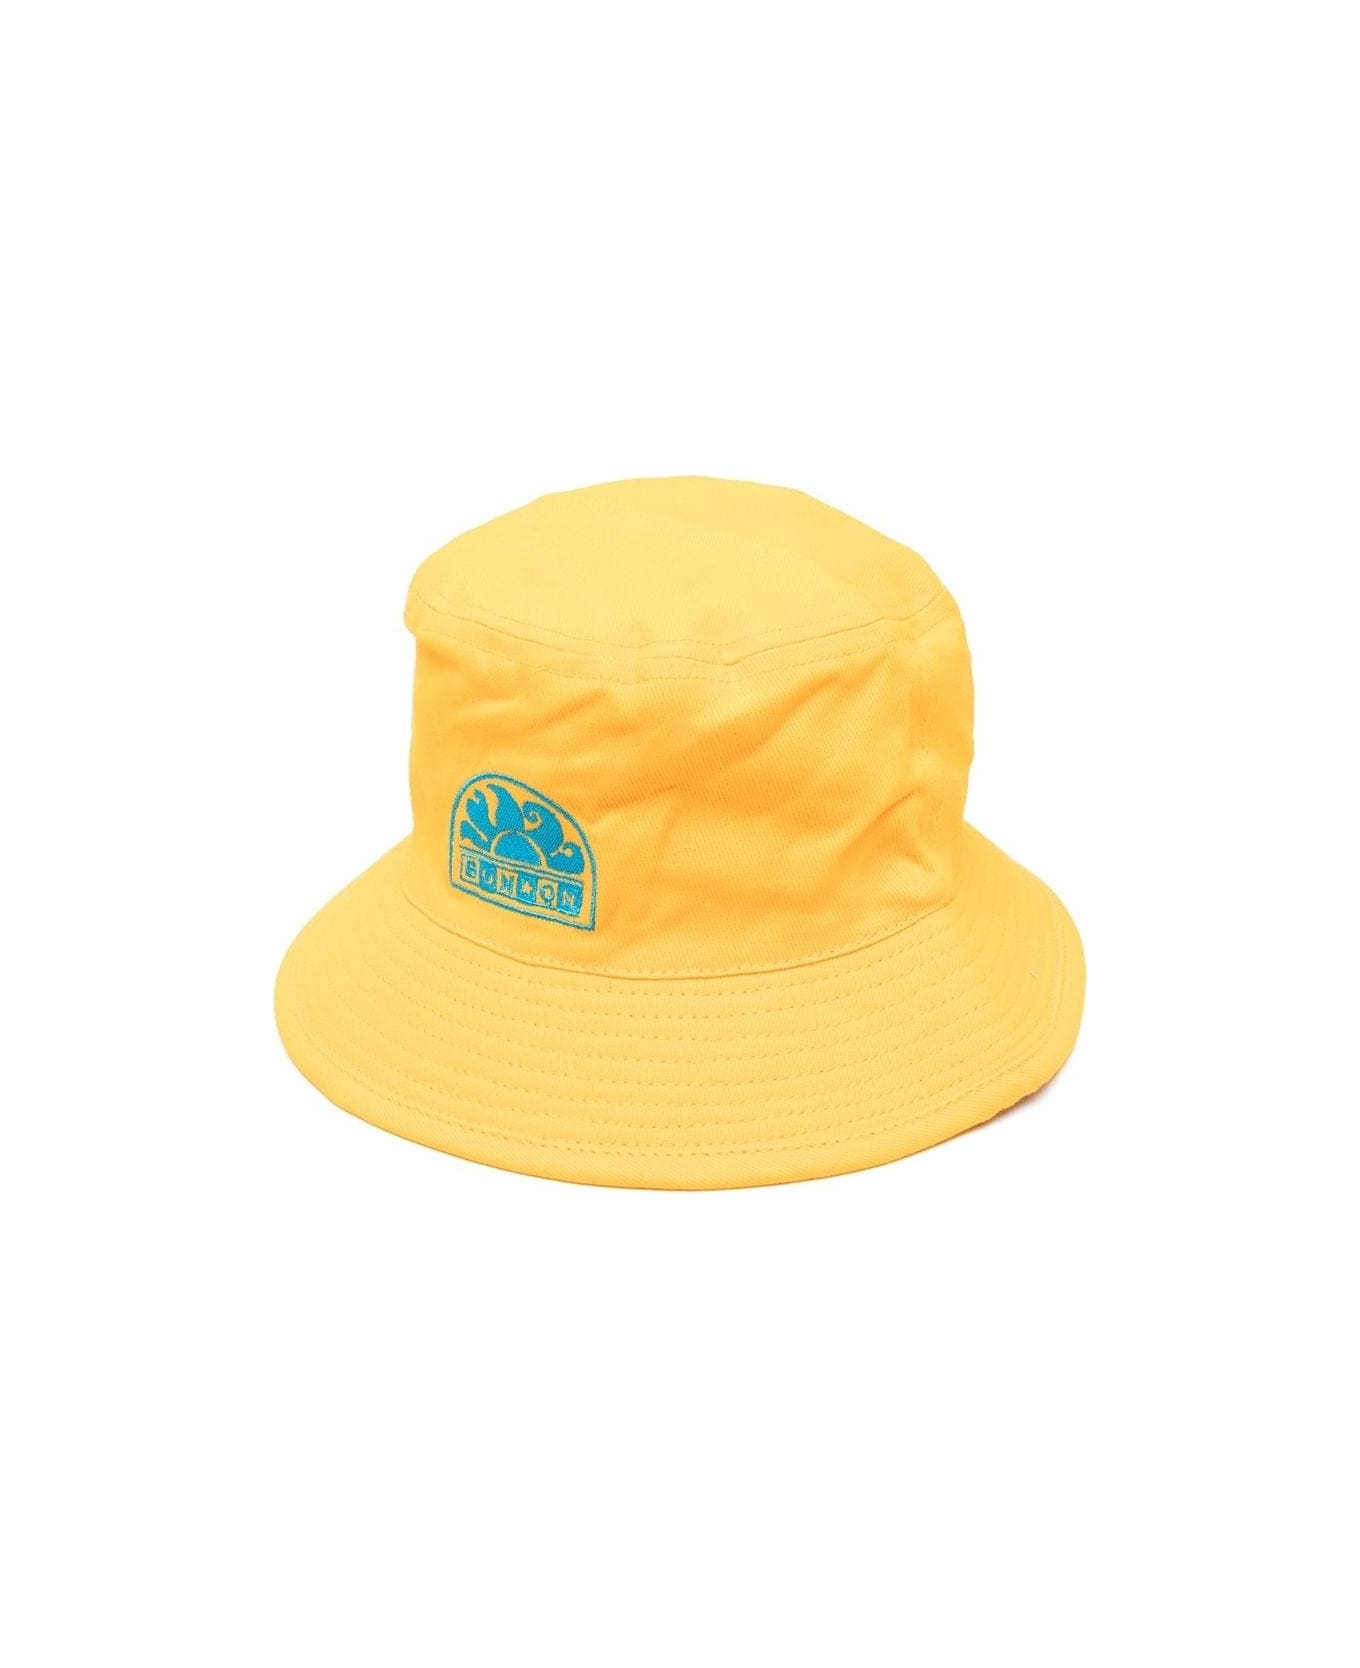 Bonton Embroidered Fisherman Hat - Yellow